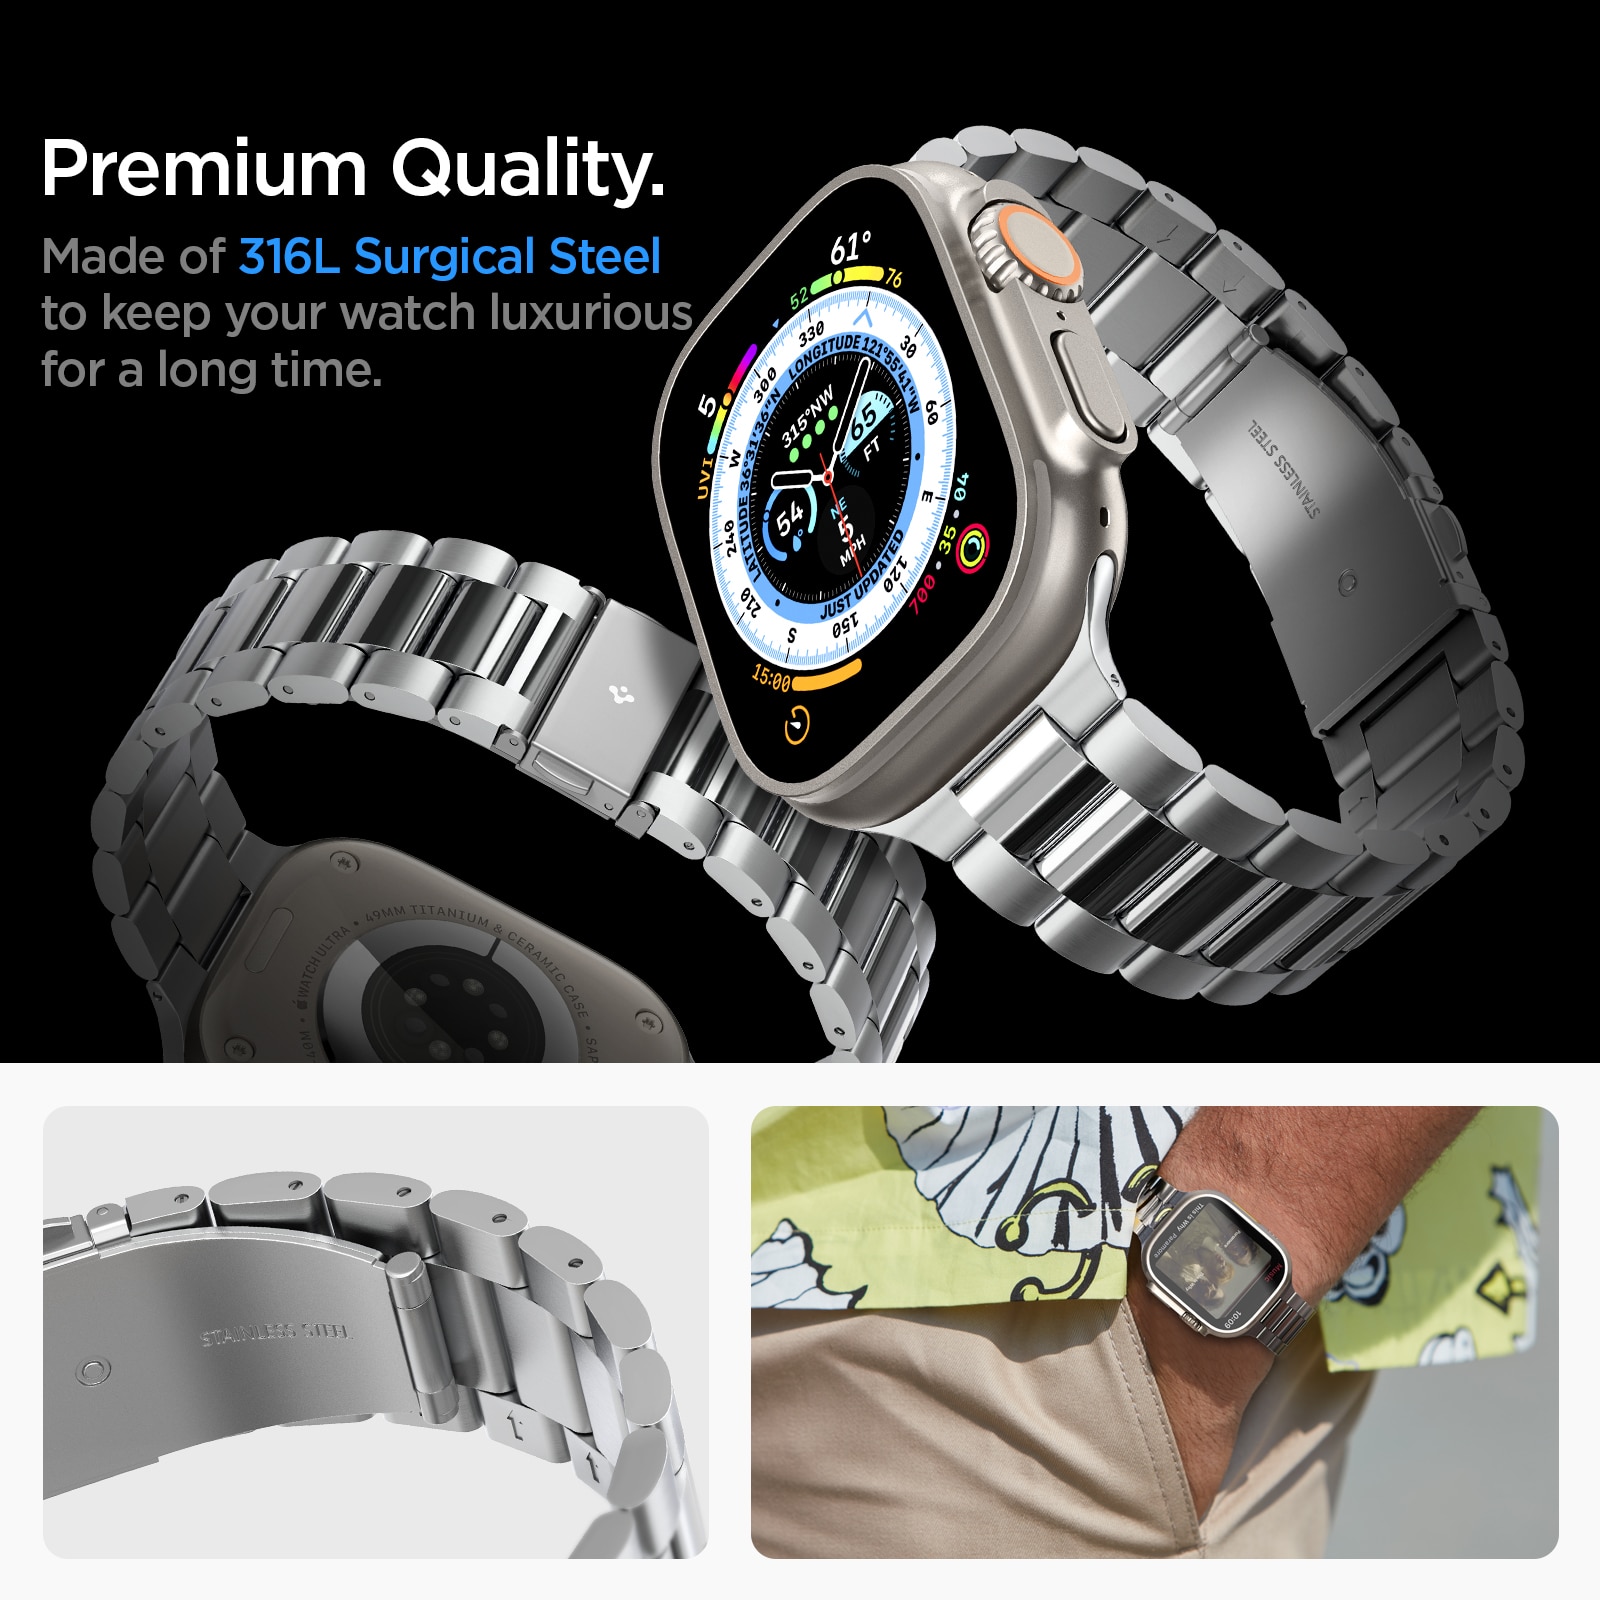 Bracelet Modern Fit 316L Apple Watch 42mm Argent